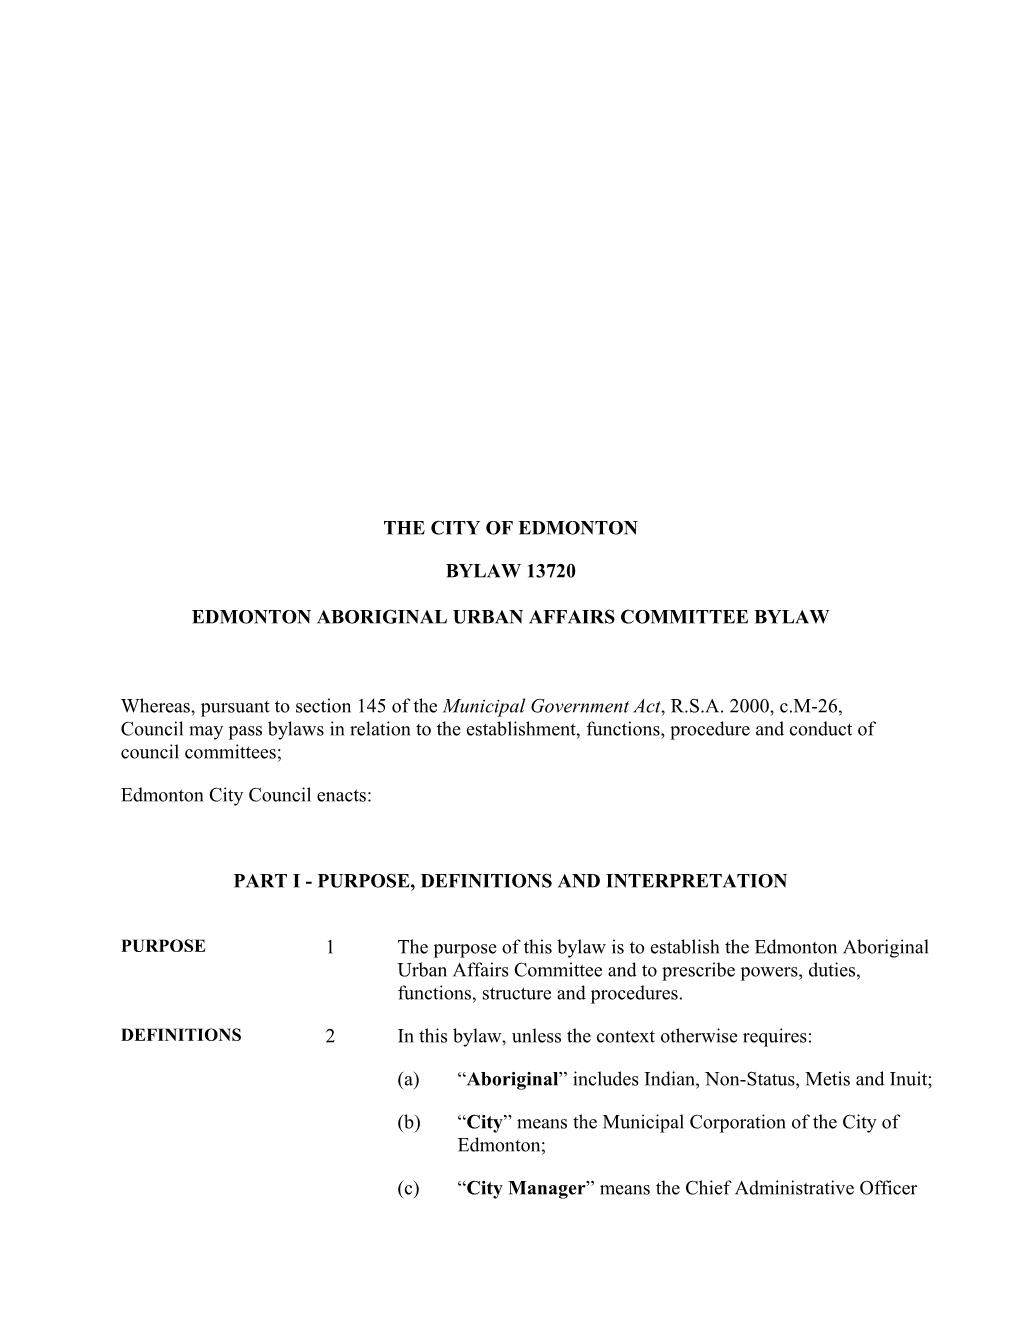 Bylaw 13720 - Edmonton Aboriginal Urban Affairs Committee Bylaw